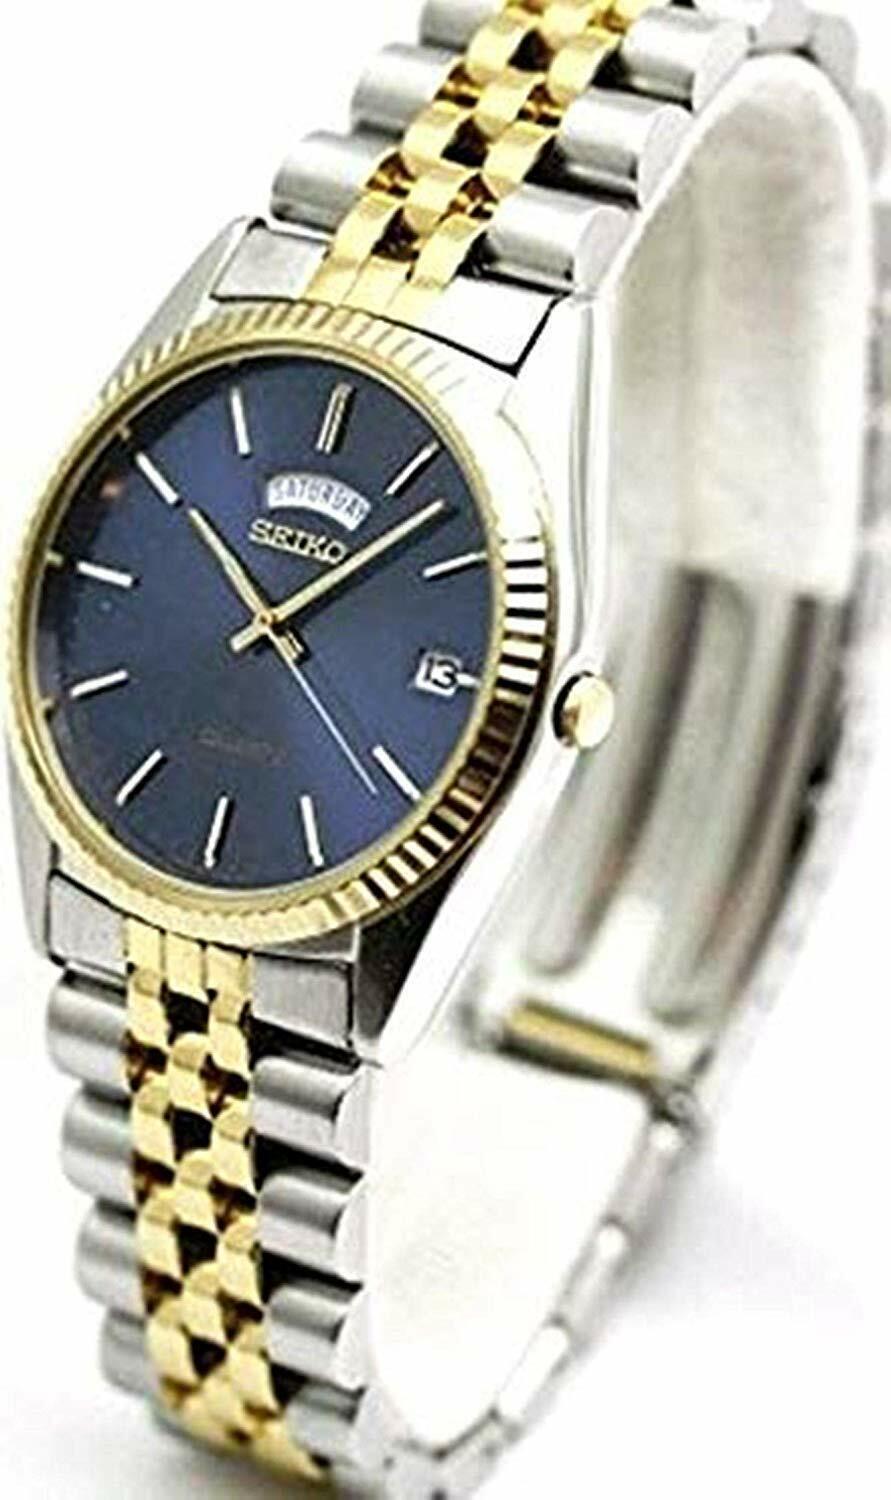 Seiko Silver Men's Watch - SGF204 for sale online | eBay